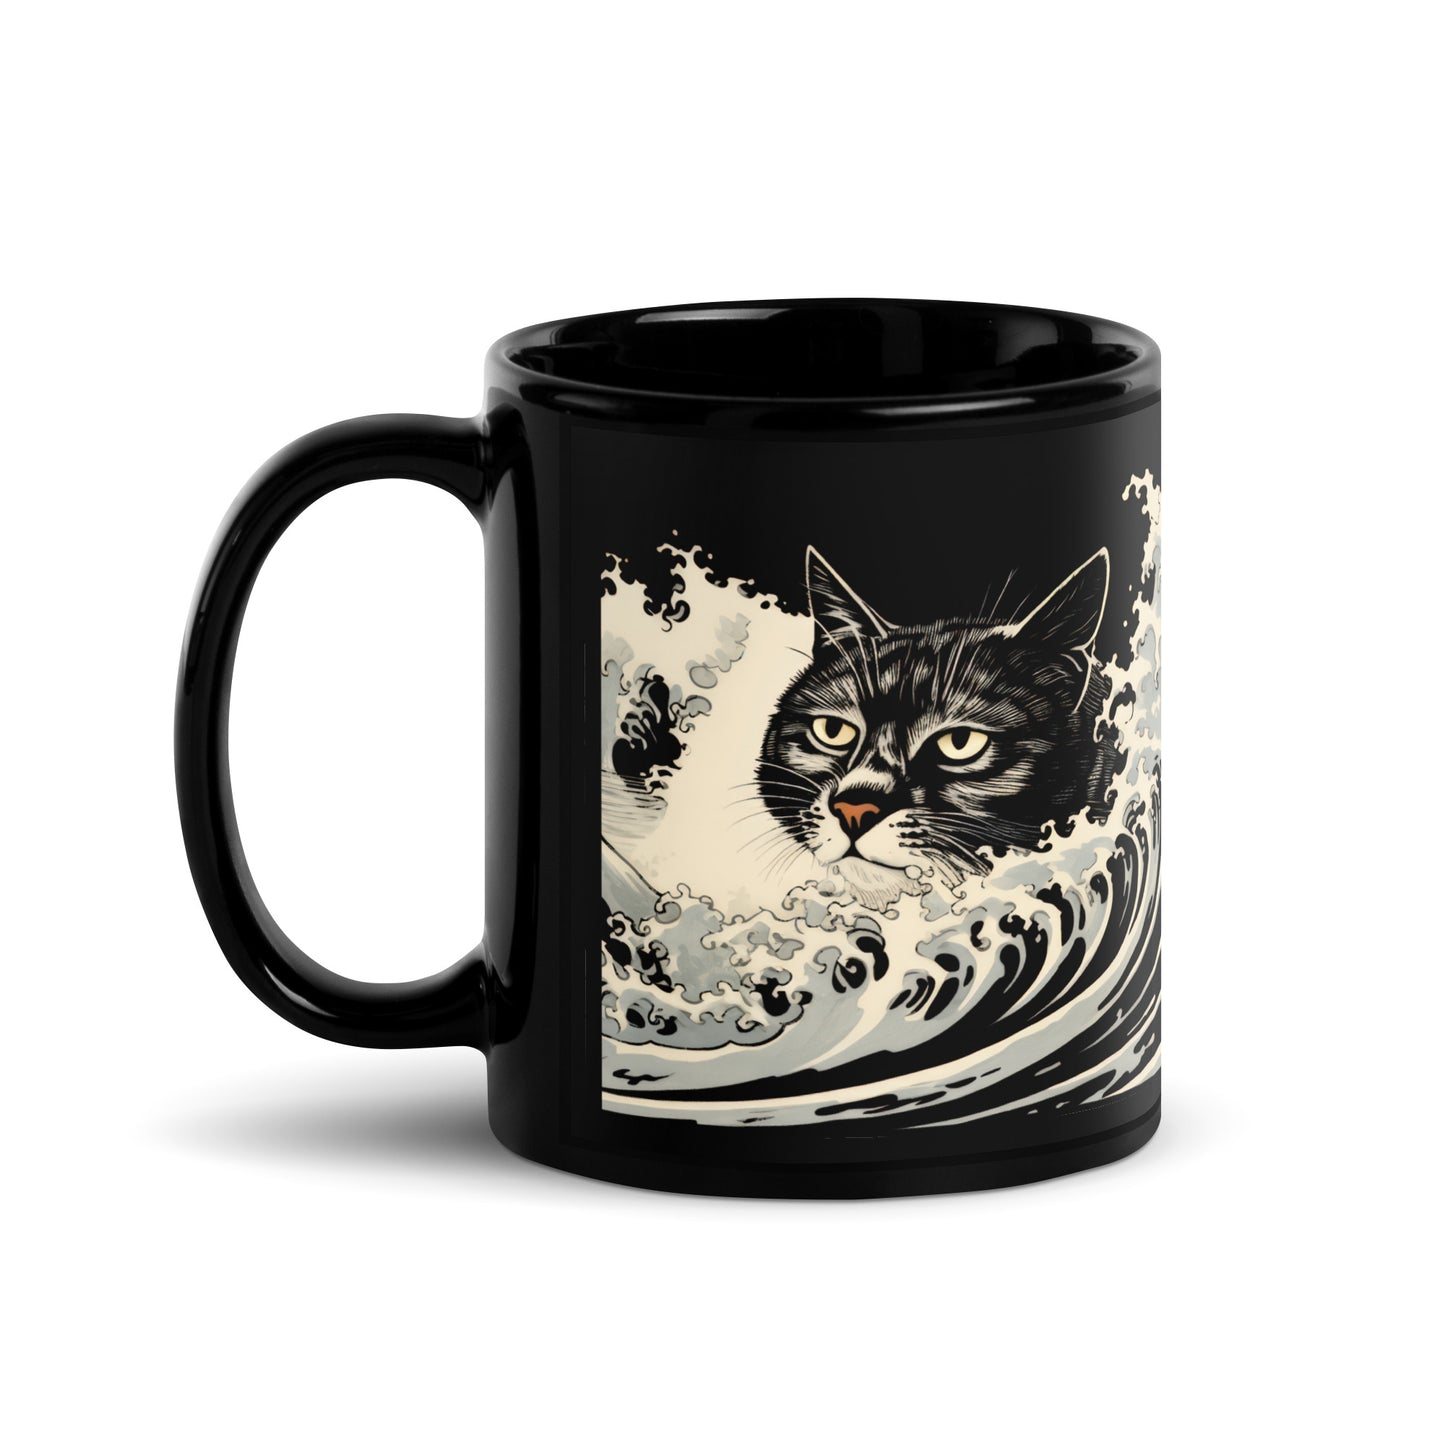 Wave Water Cat - Black Glossy Mug